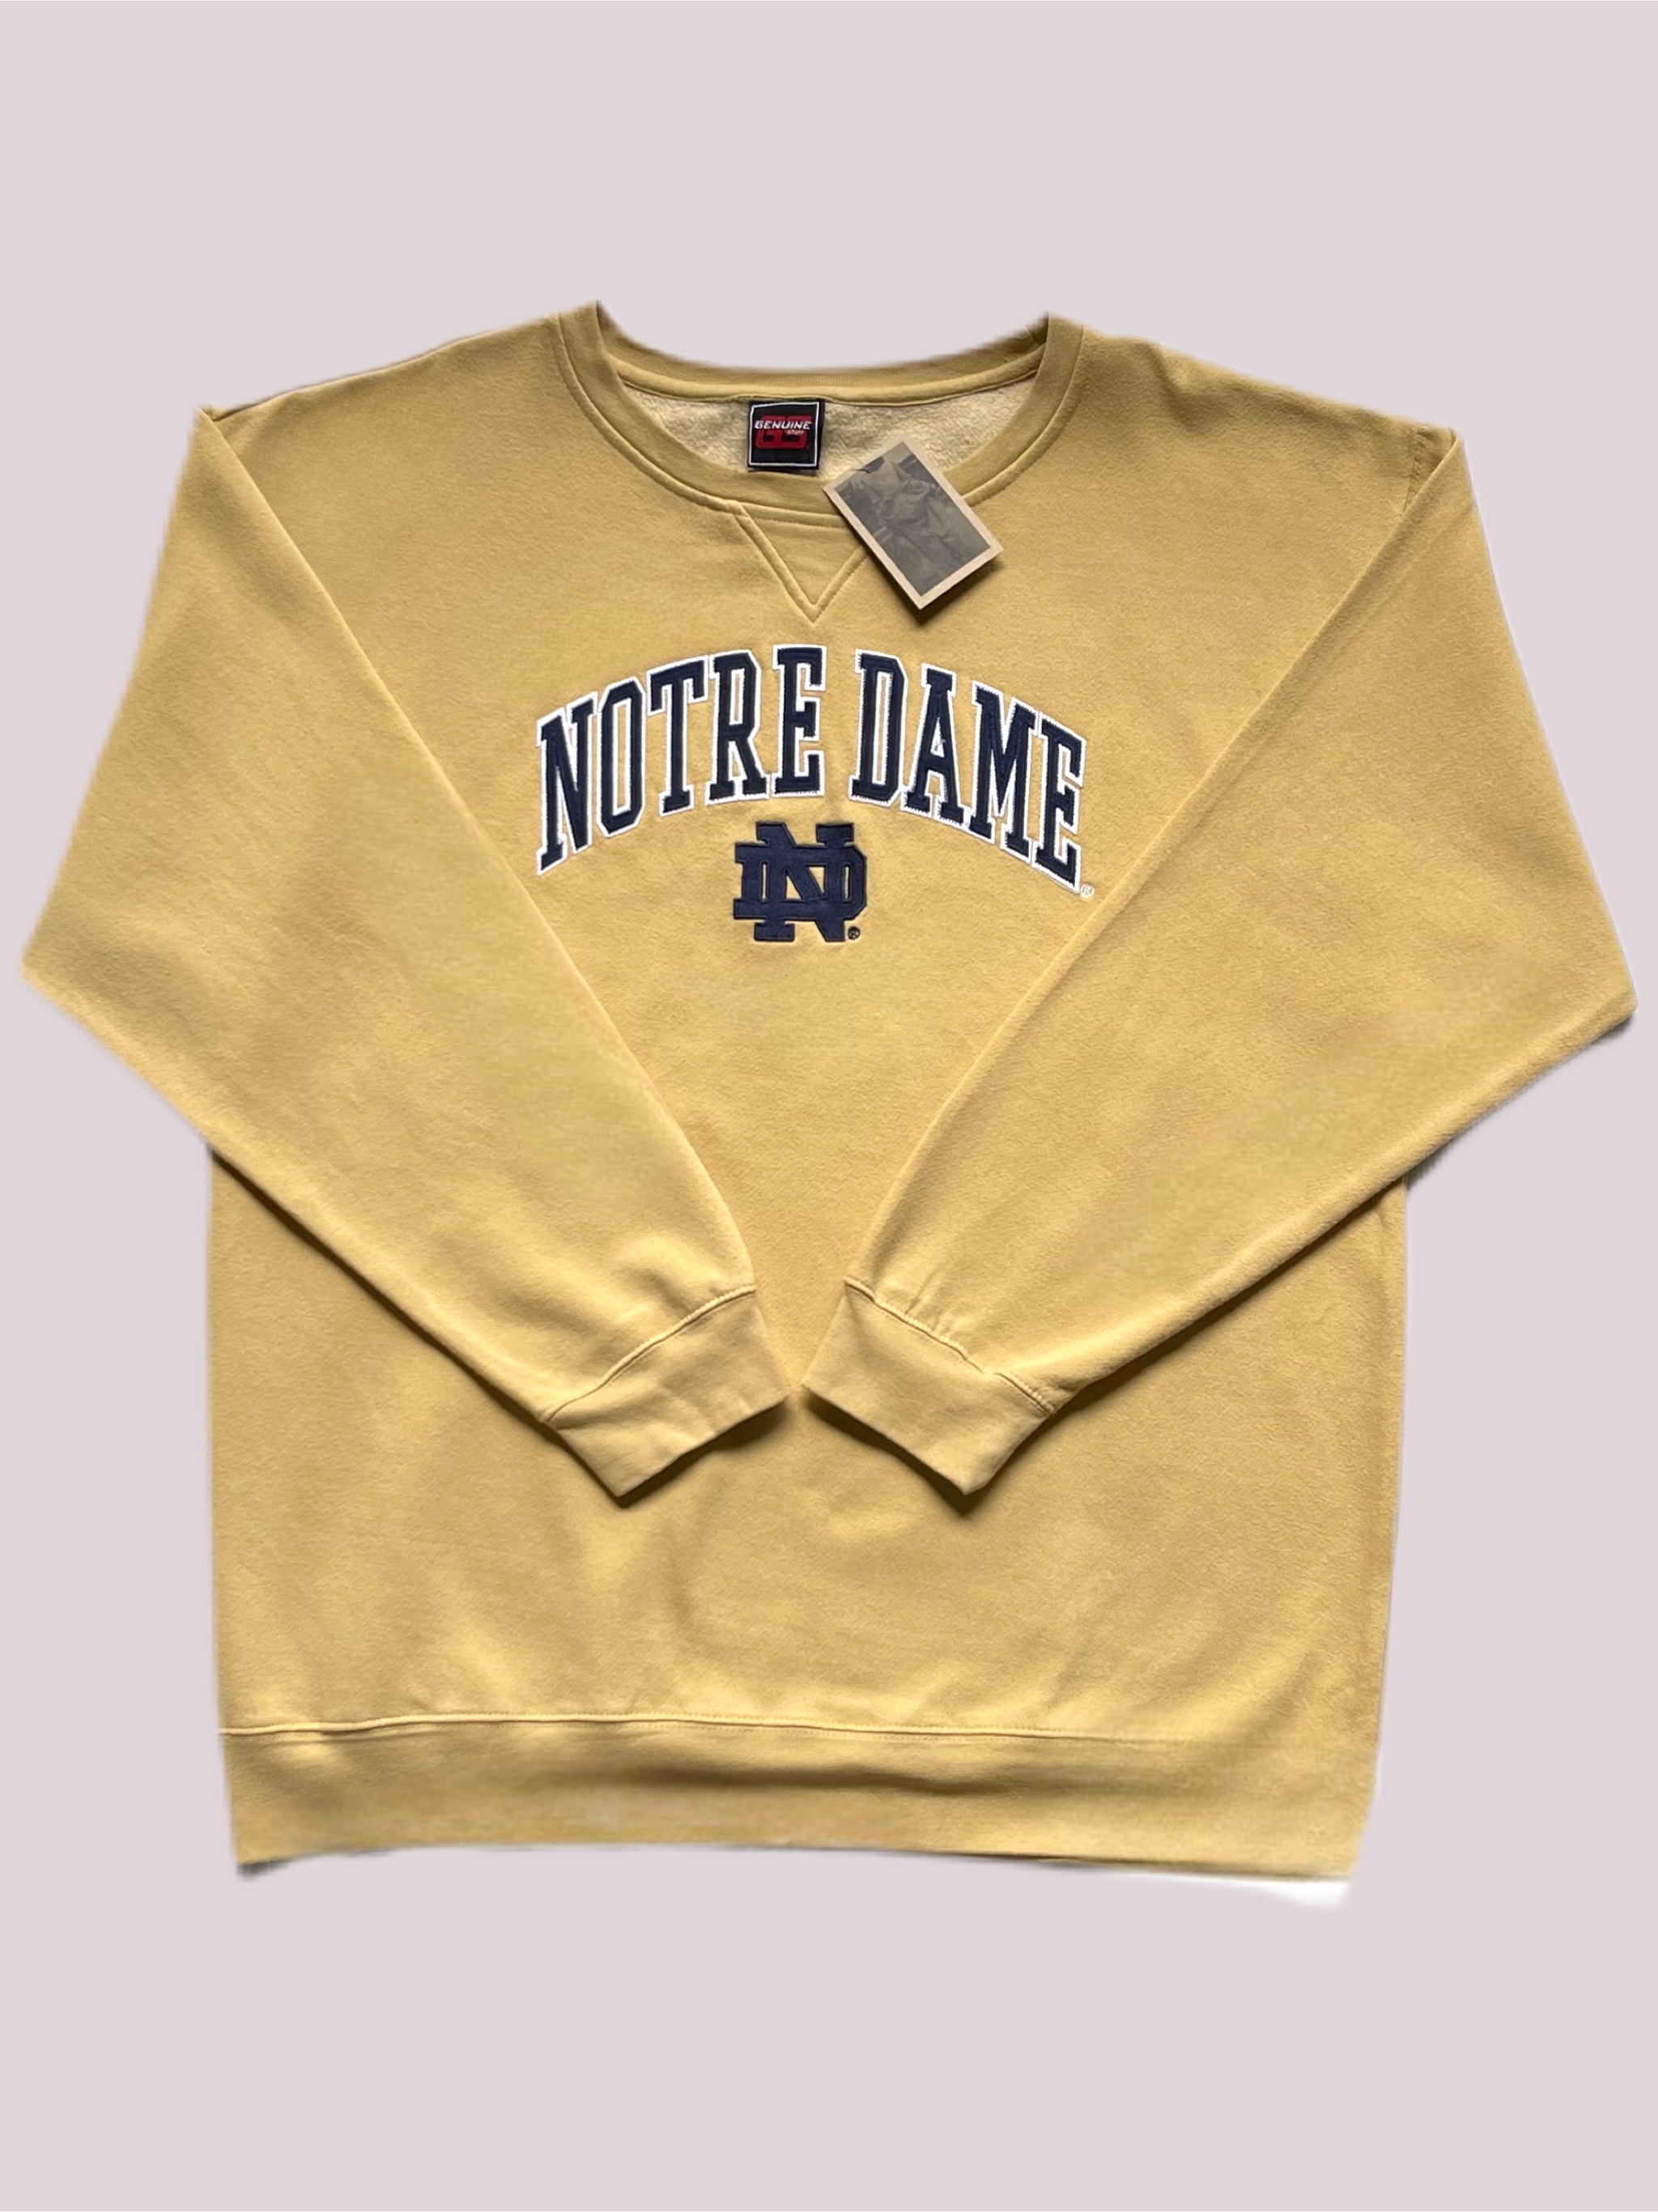 Notre Dame- college (XL)